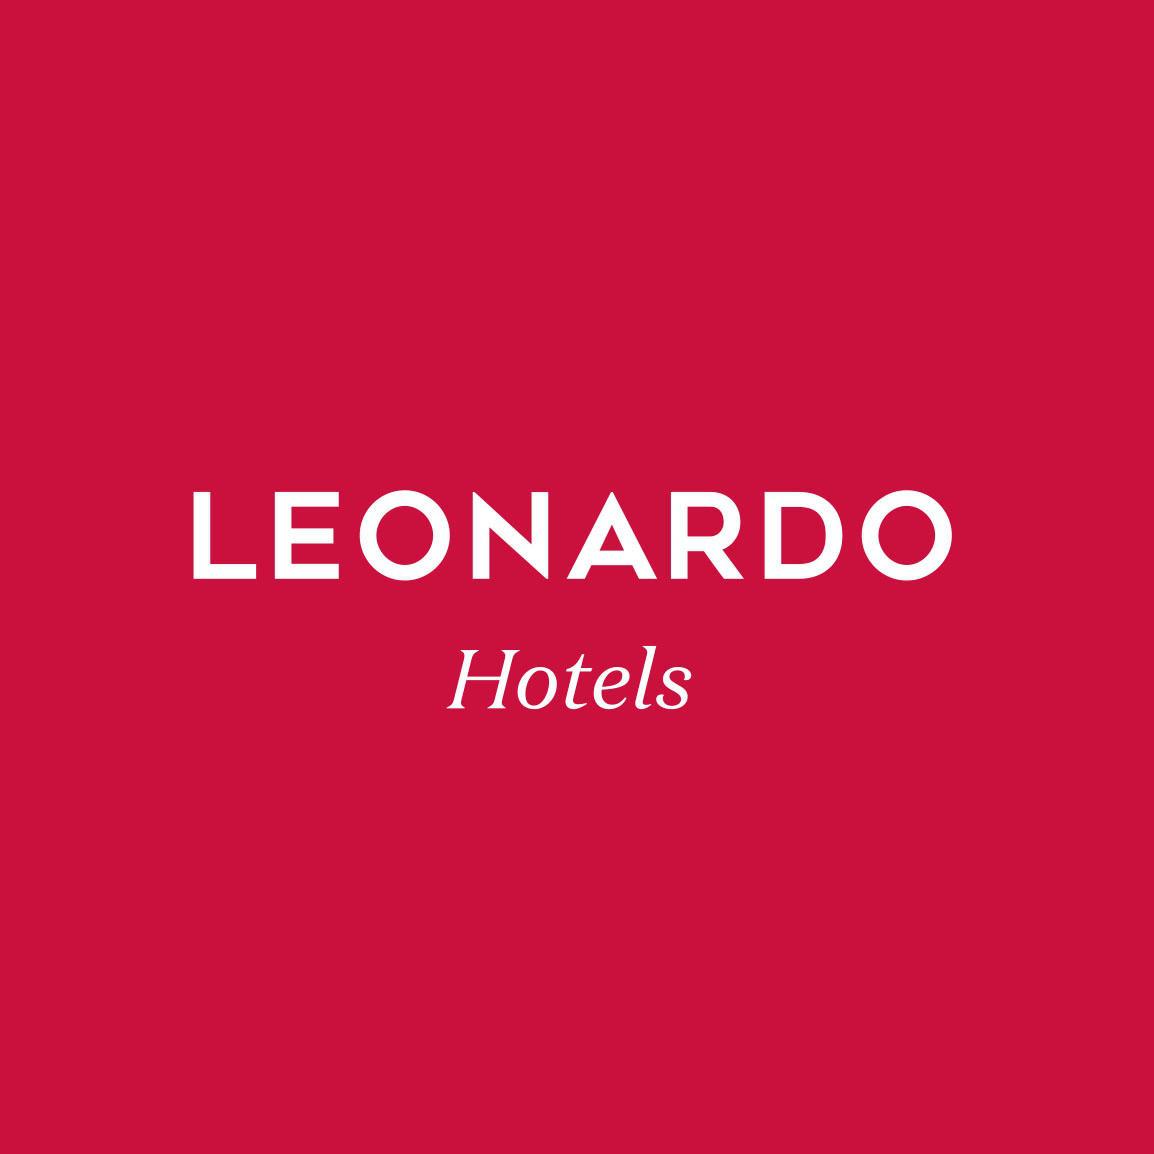 Leonardo Inn Hotel Glasgow West End - Glasgow, Lanarkshire G12 0ZD - 01413 348161 | ShowMeLocal.com